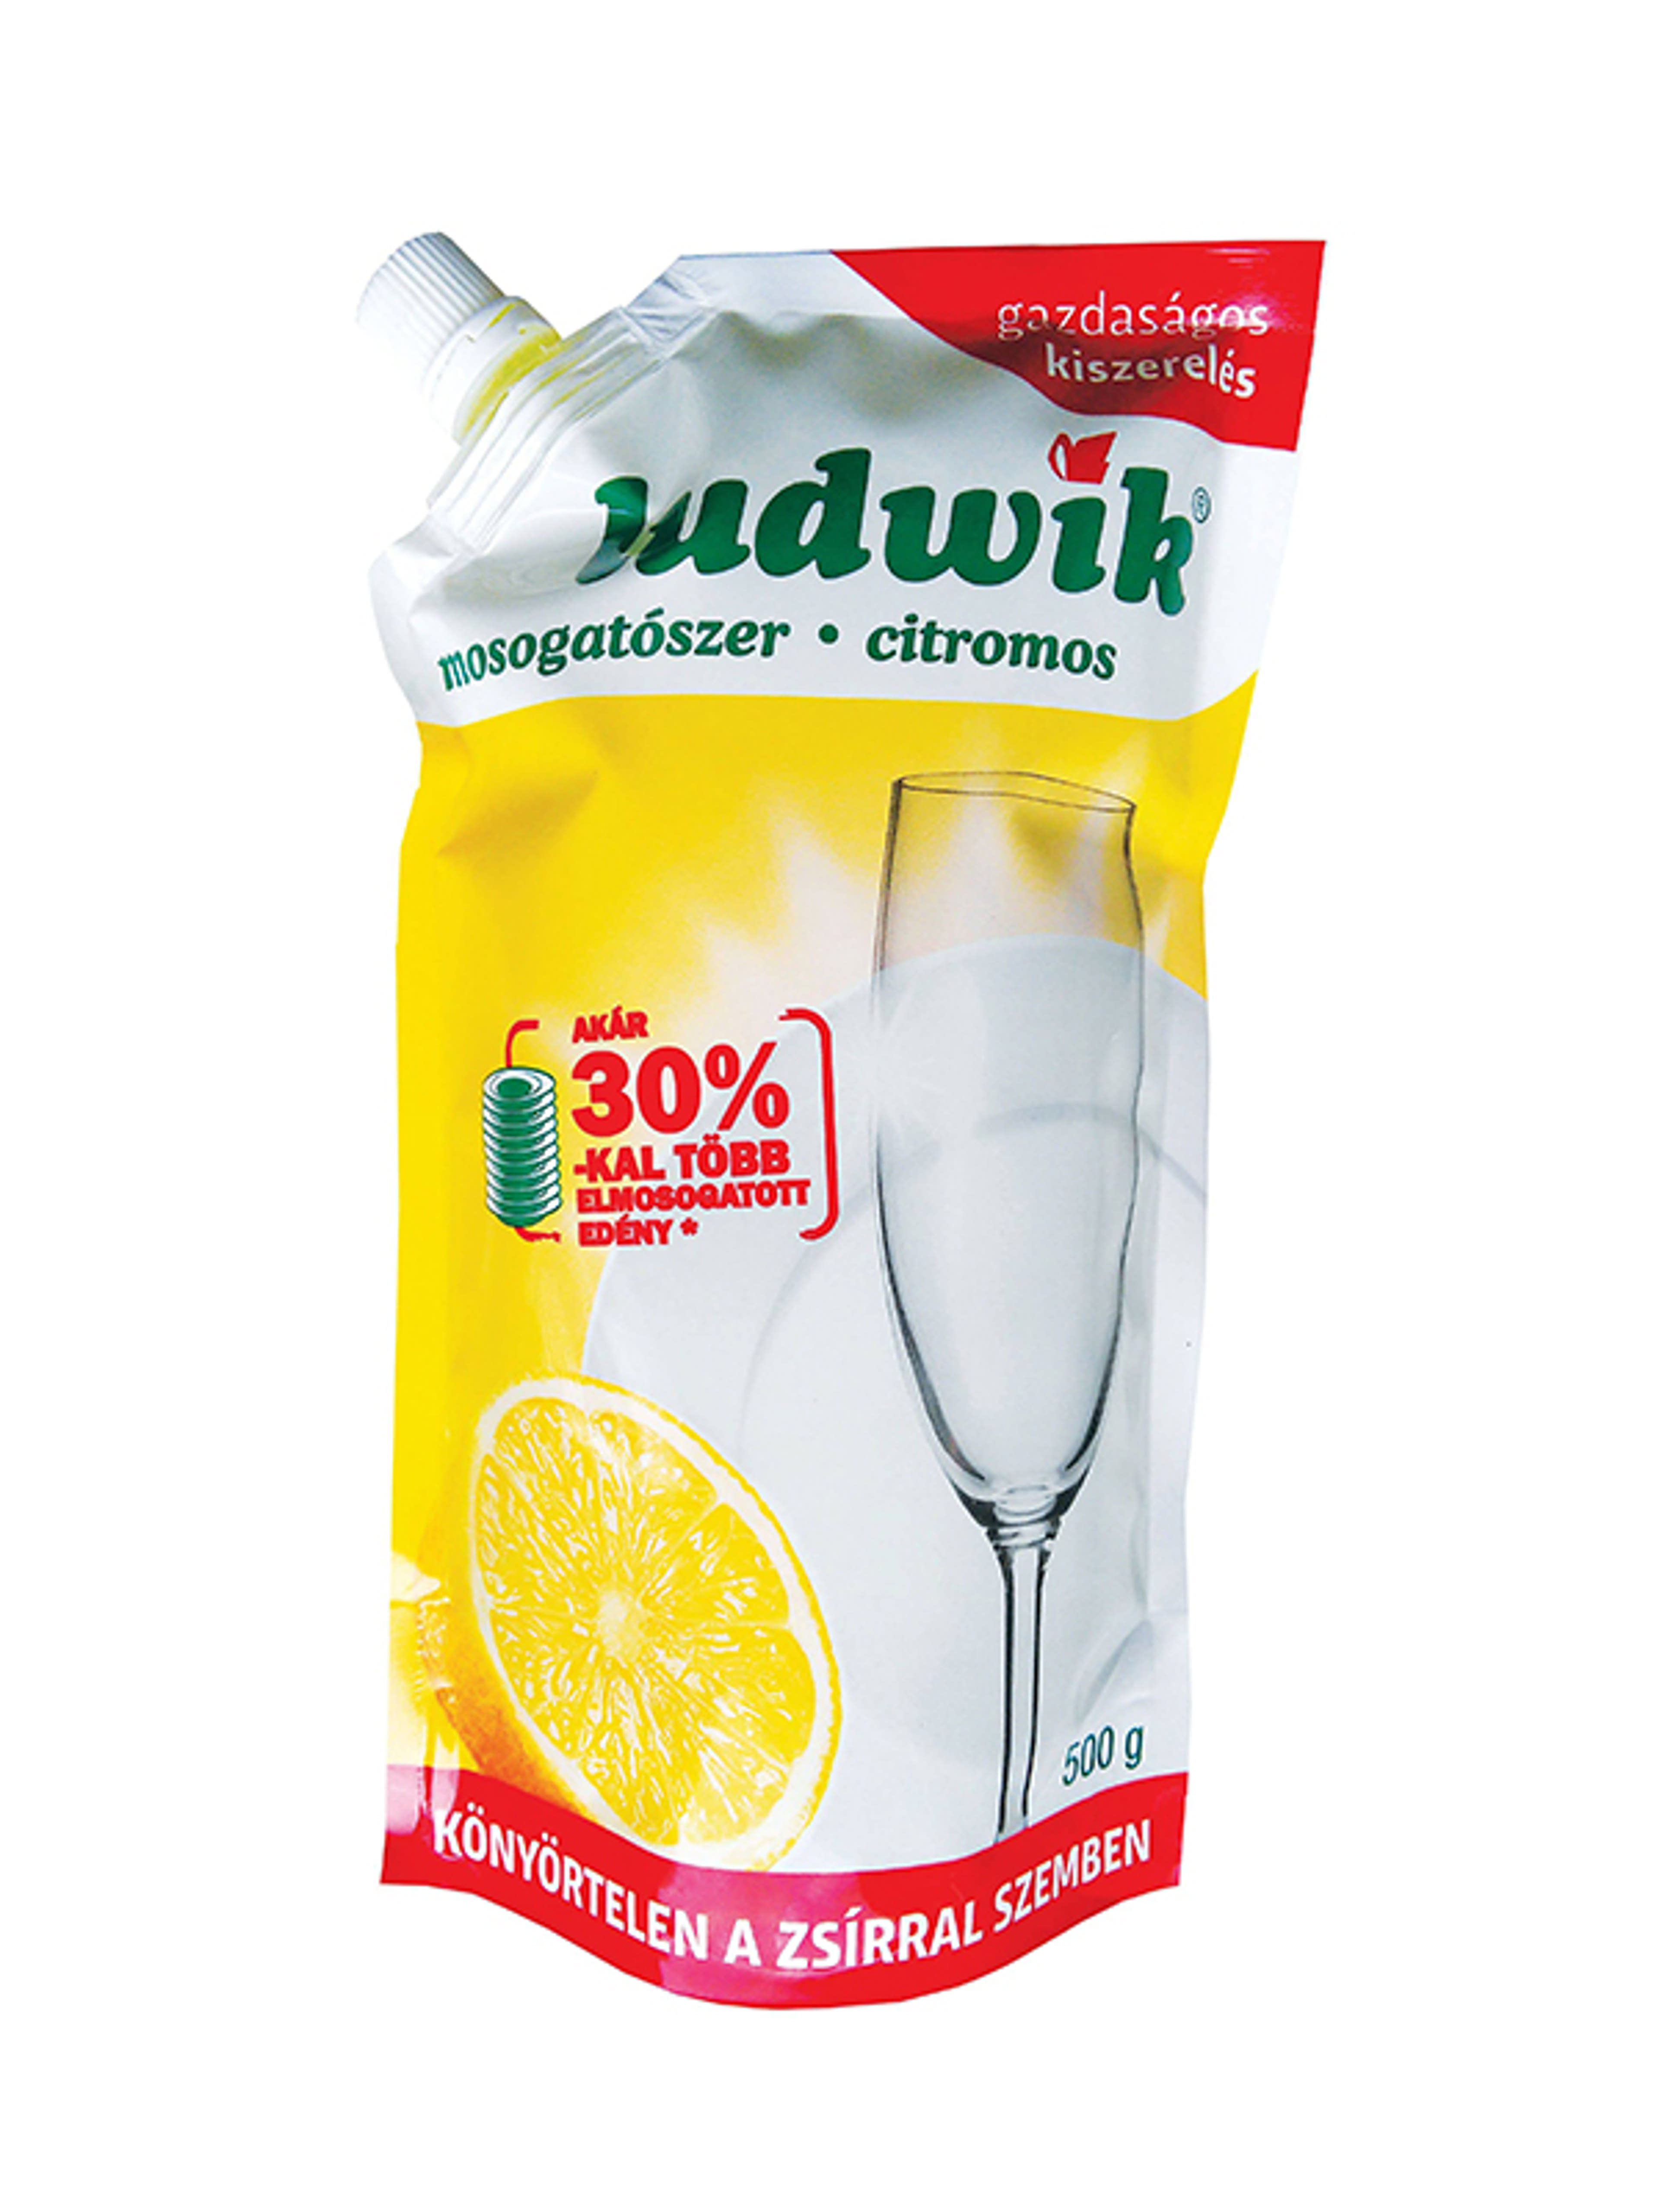 Ludwik mosogatószer citrom - 500 g